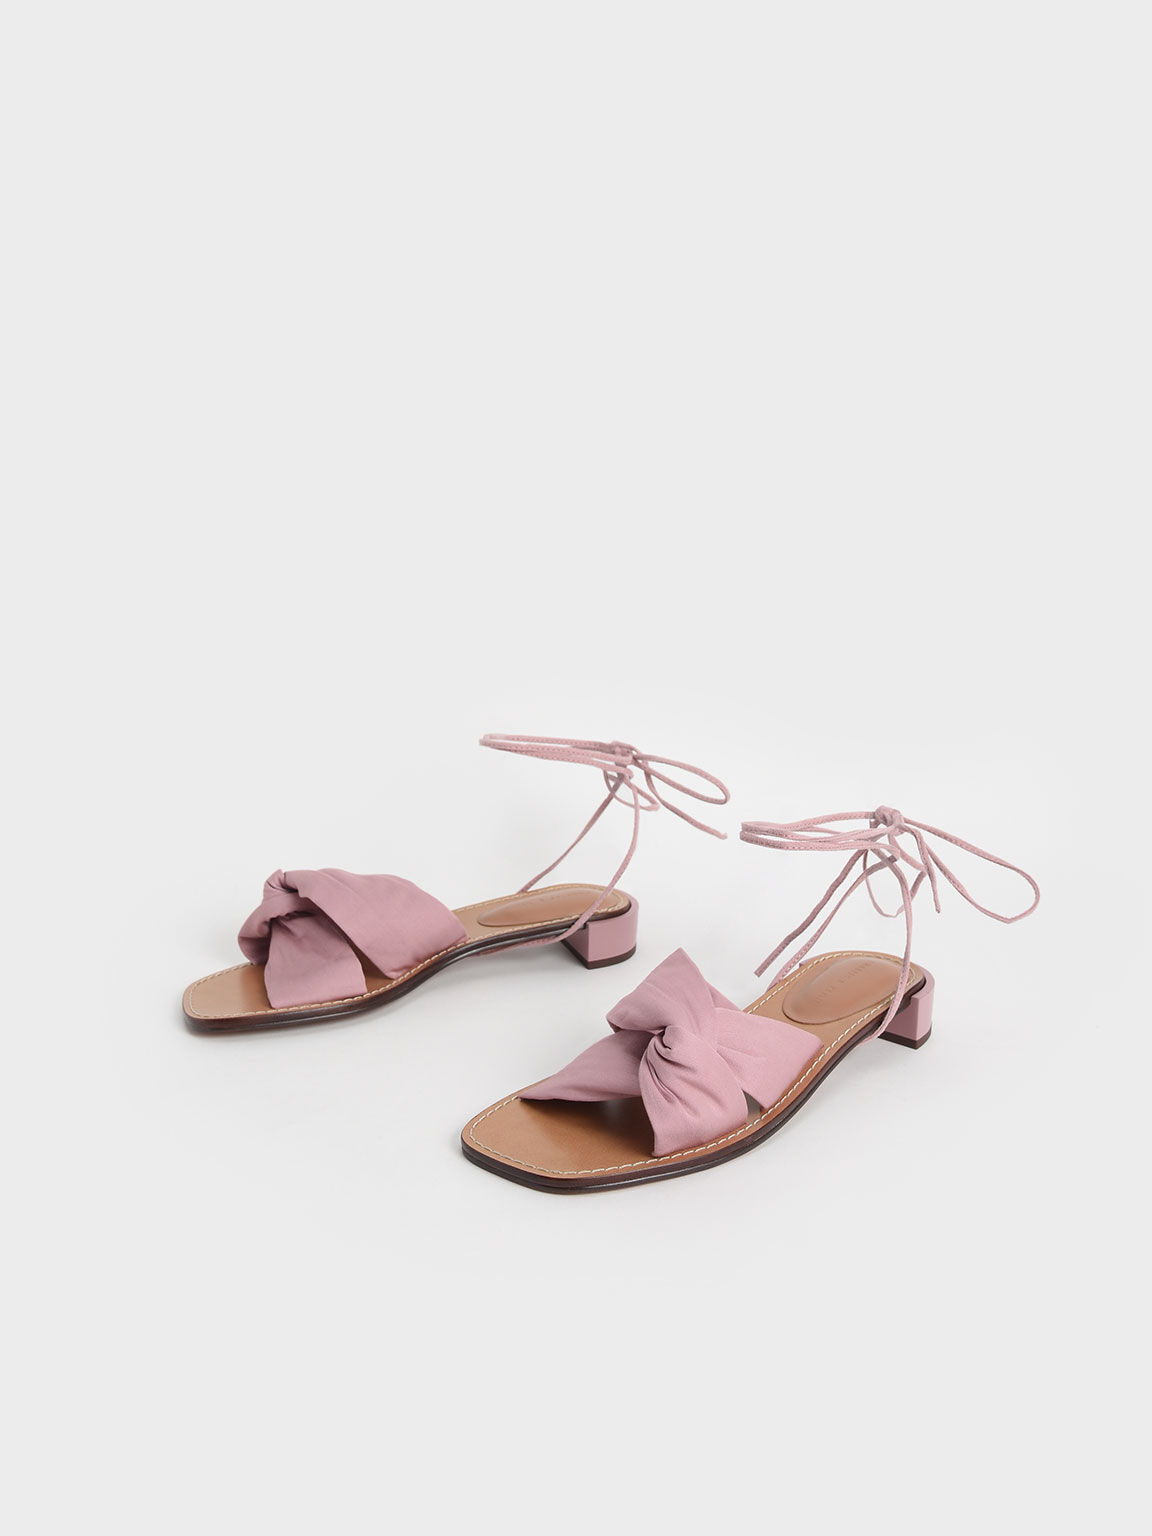 Knotted Tie-Around Sandals, Pink, hi-res